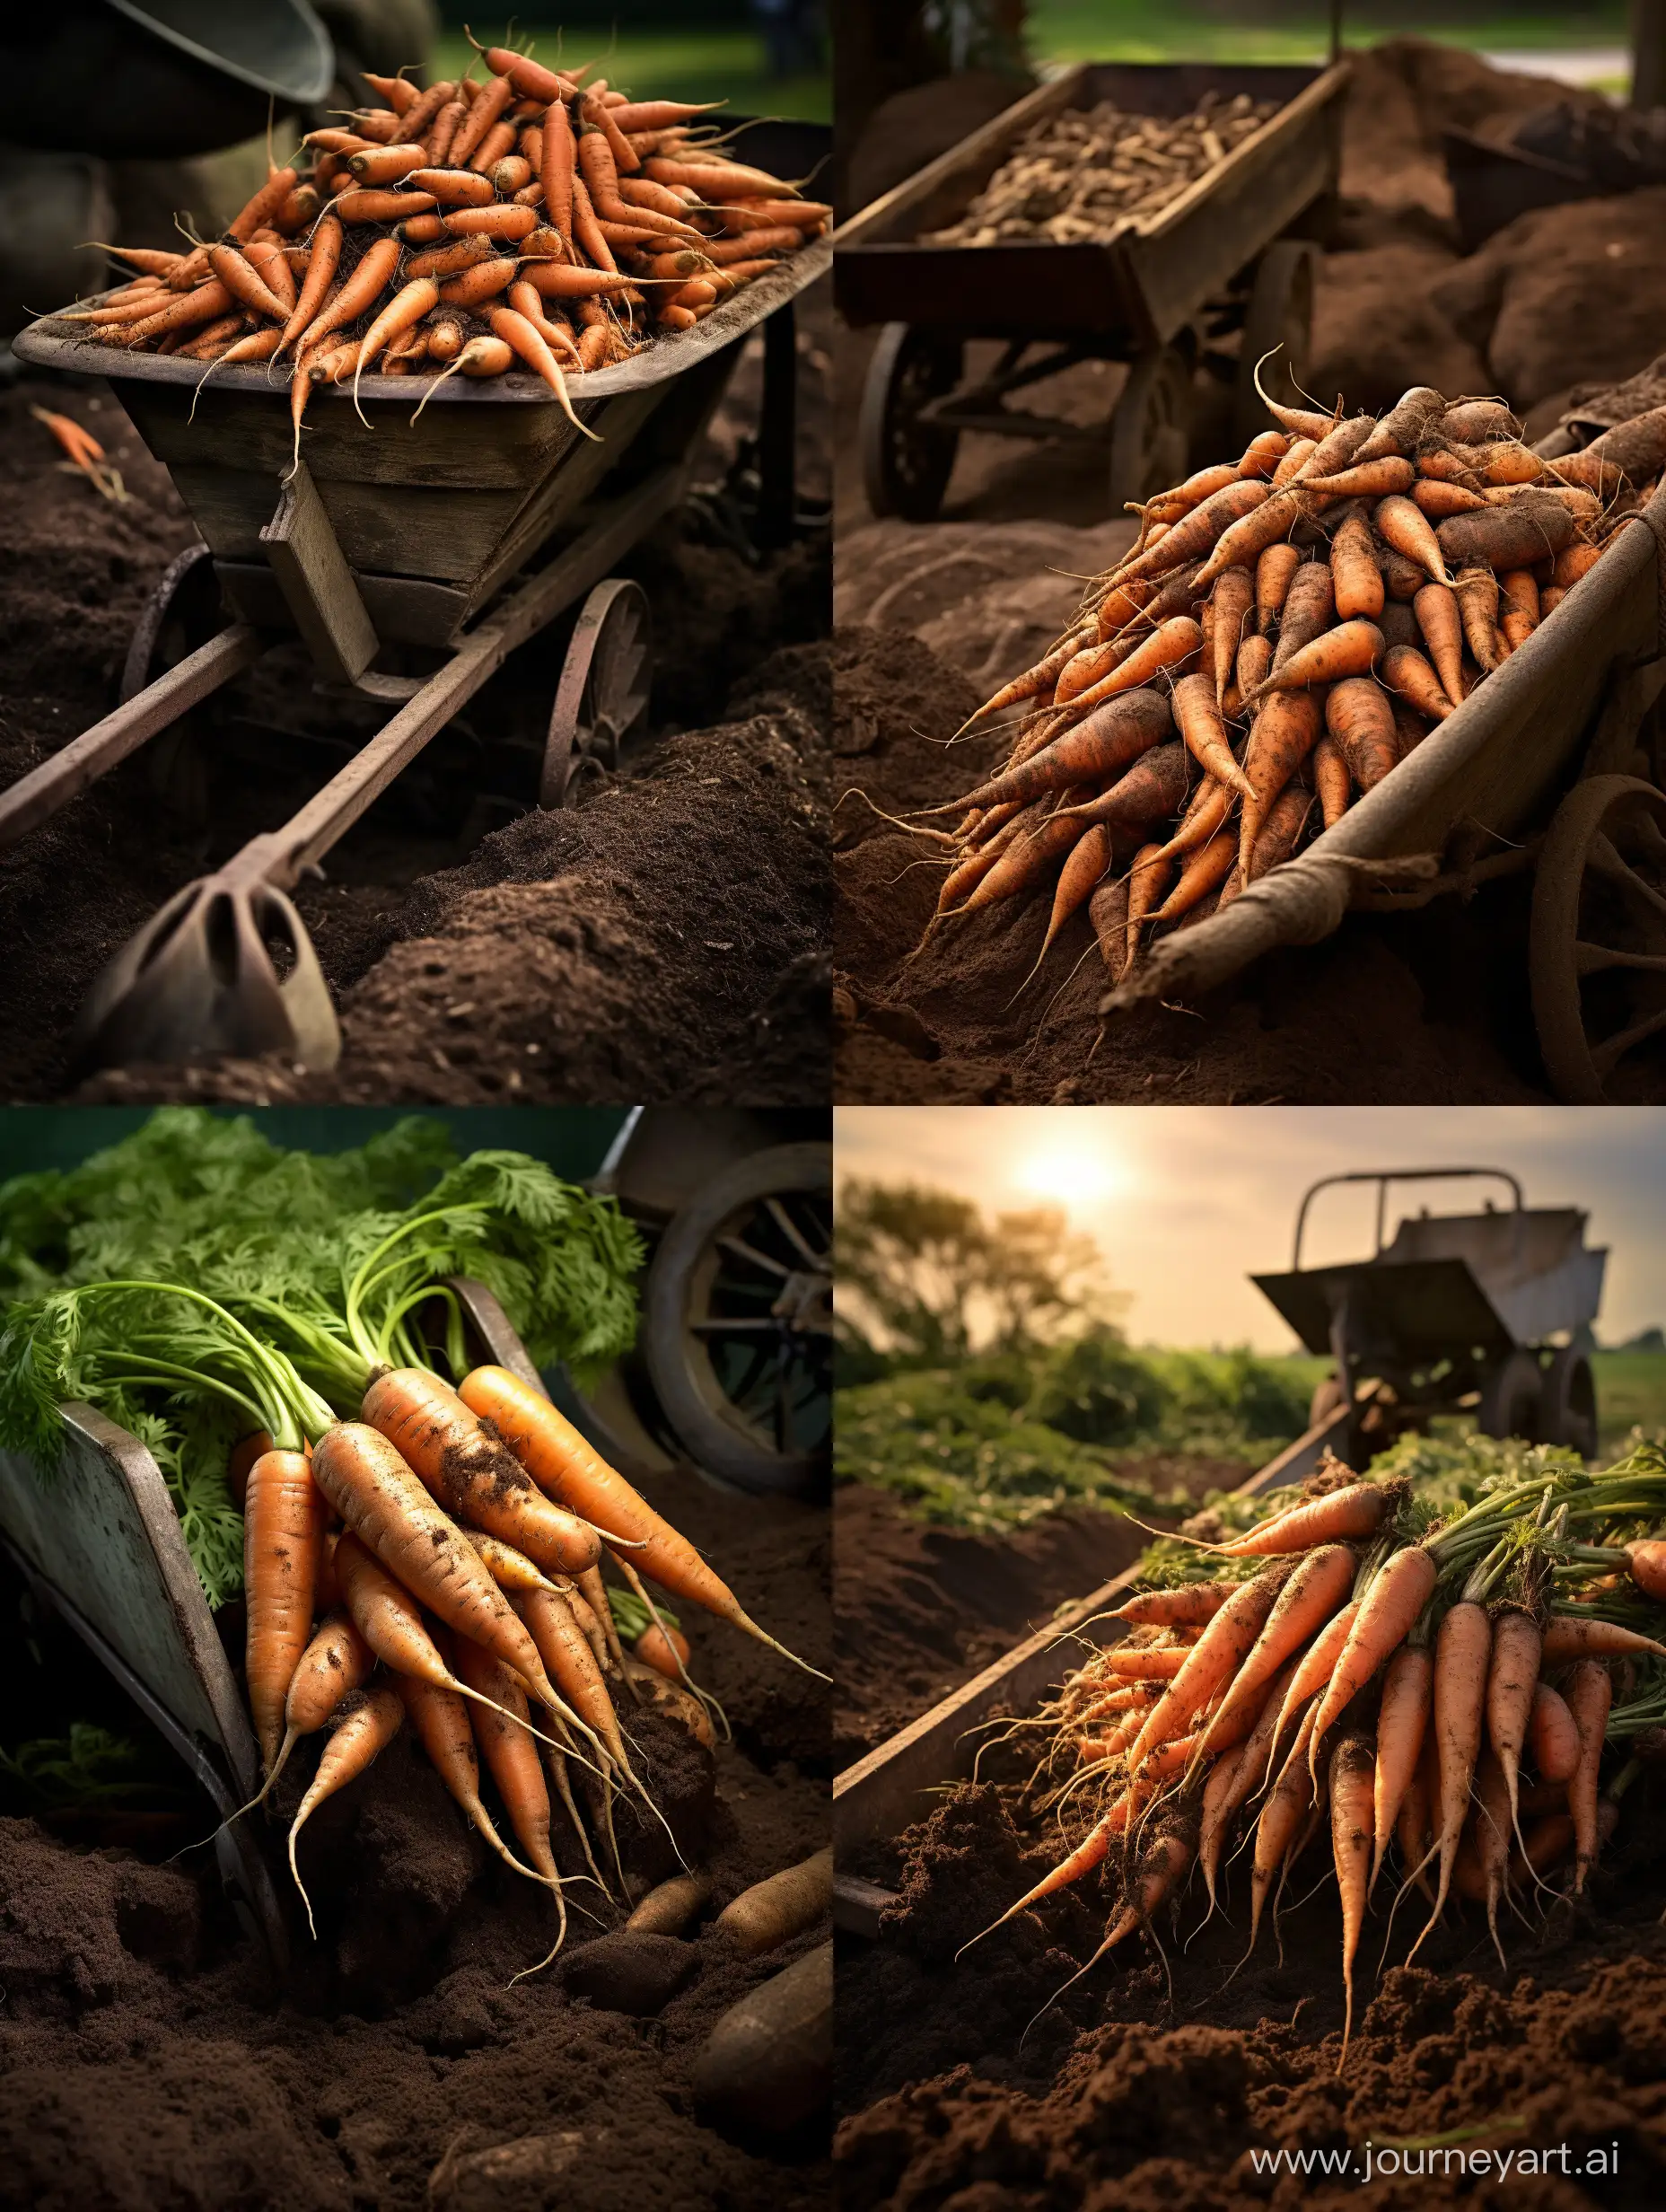 CloseUp-Realistic-Farm-Scene-with-Fresh-Carrots-and-Wheelbarrow